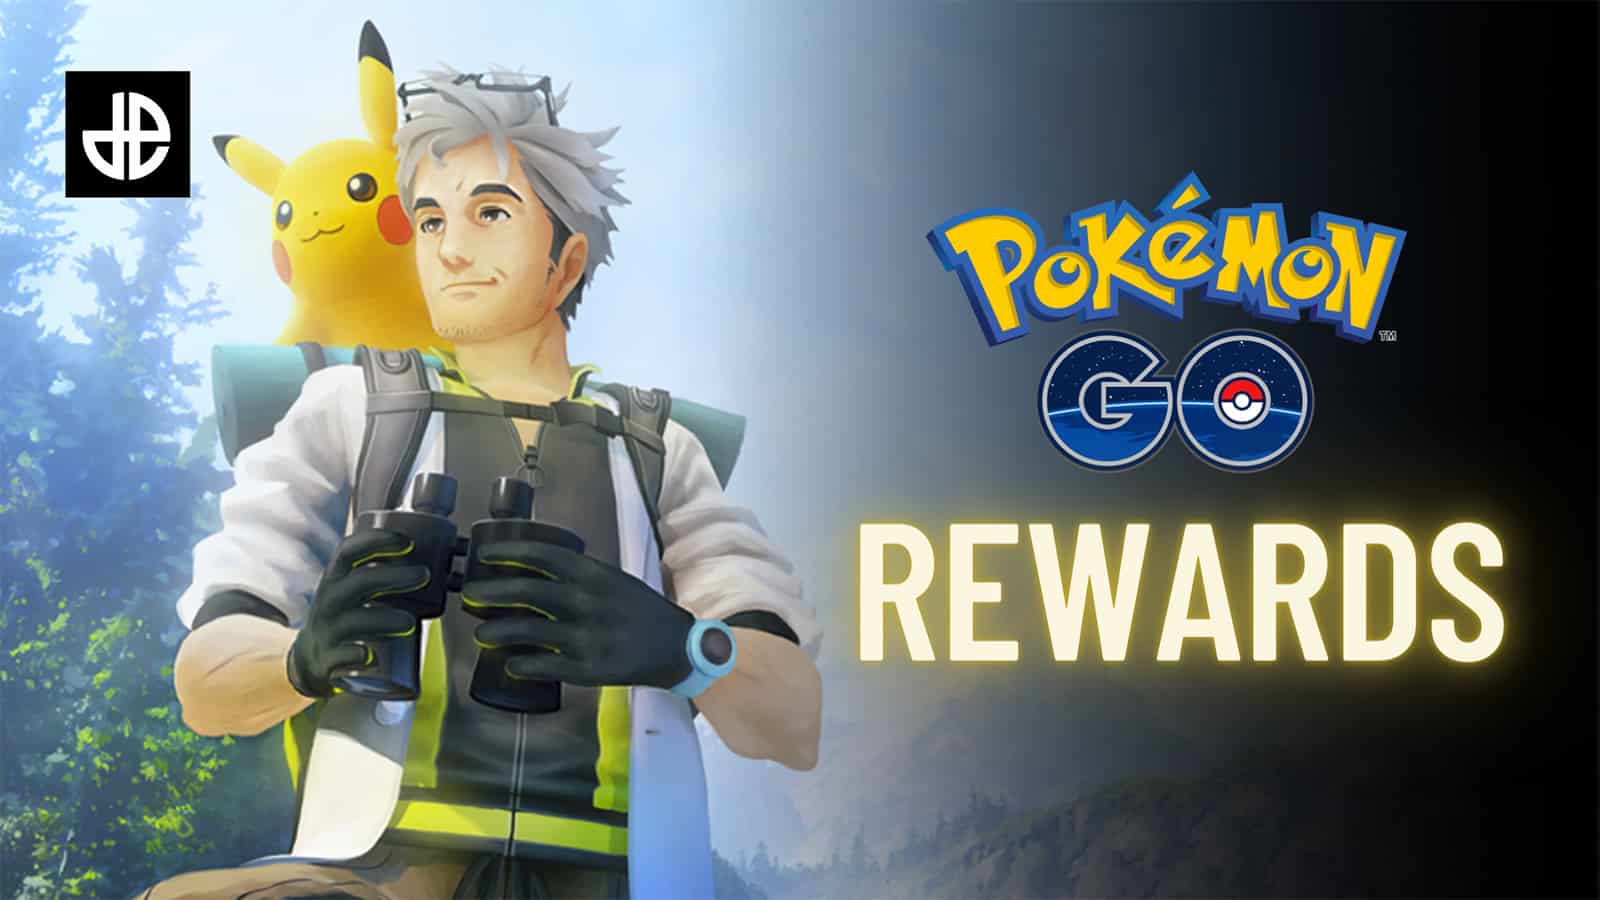 Une affiche pour Pokemon Go Prime Gaming Rewards